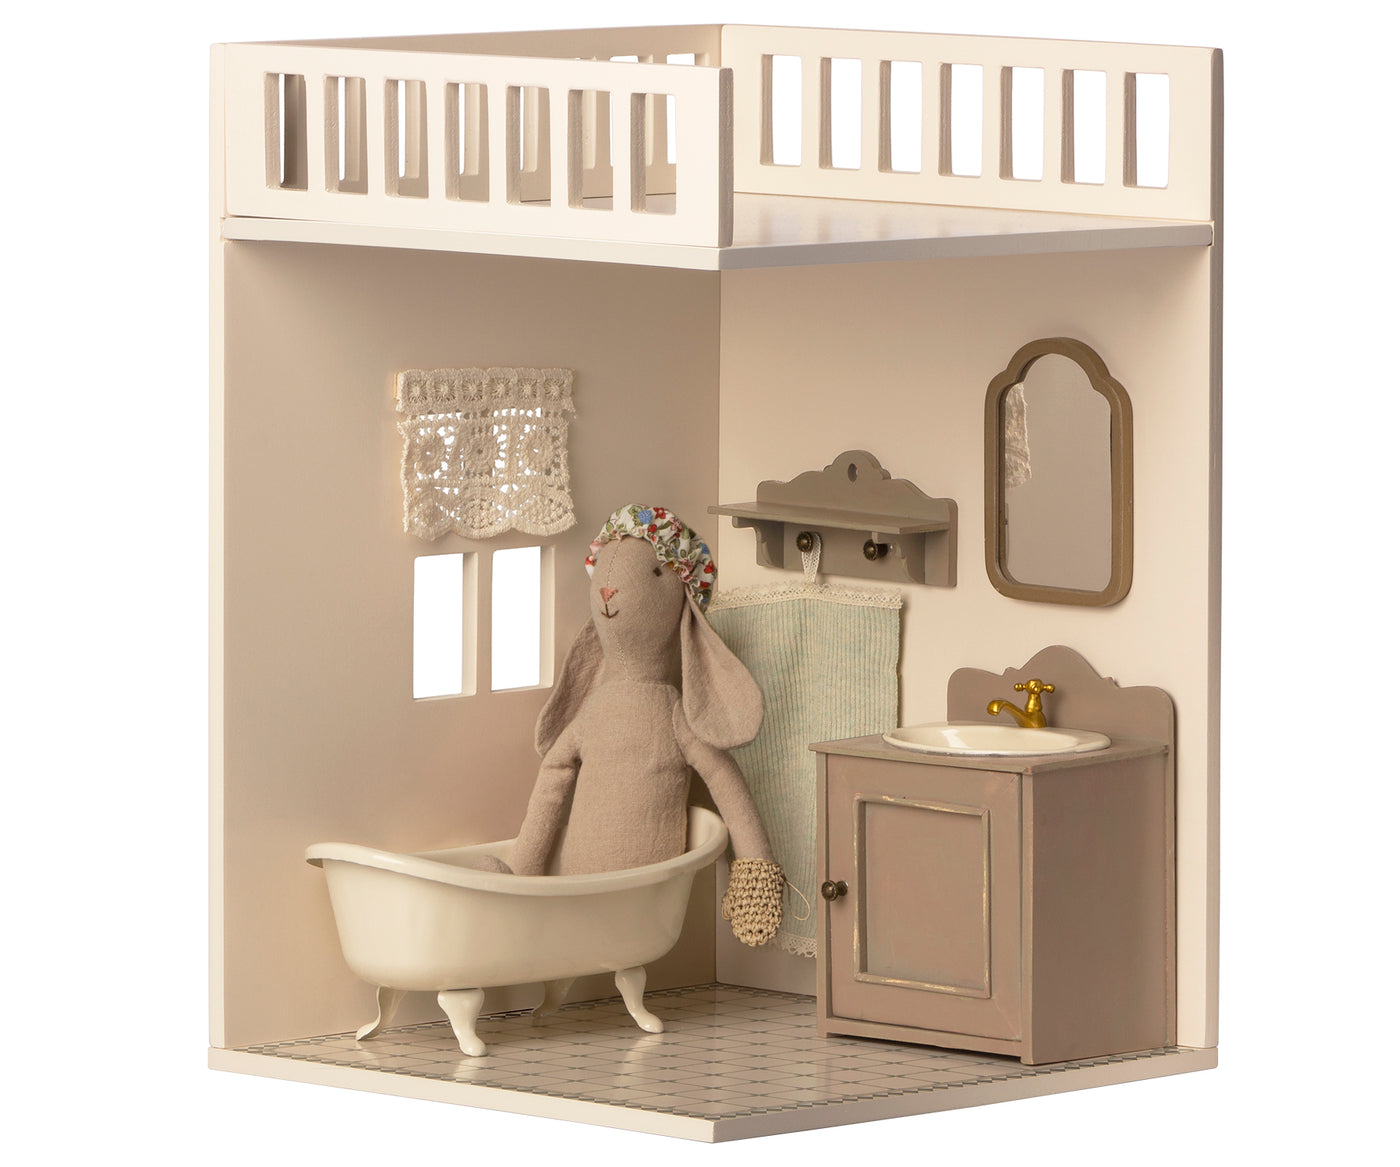 House of miniature - Bathroom